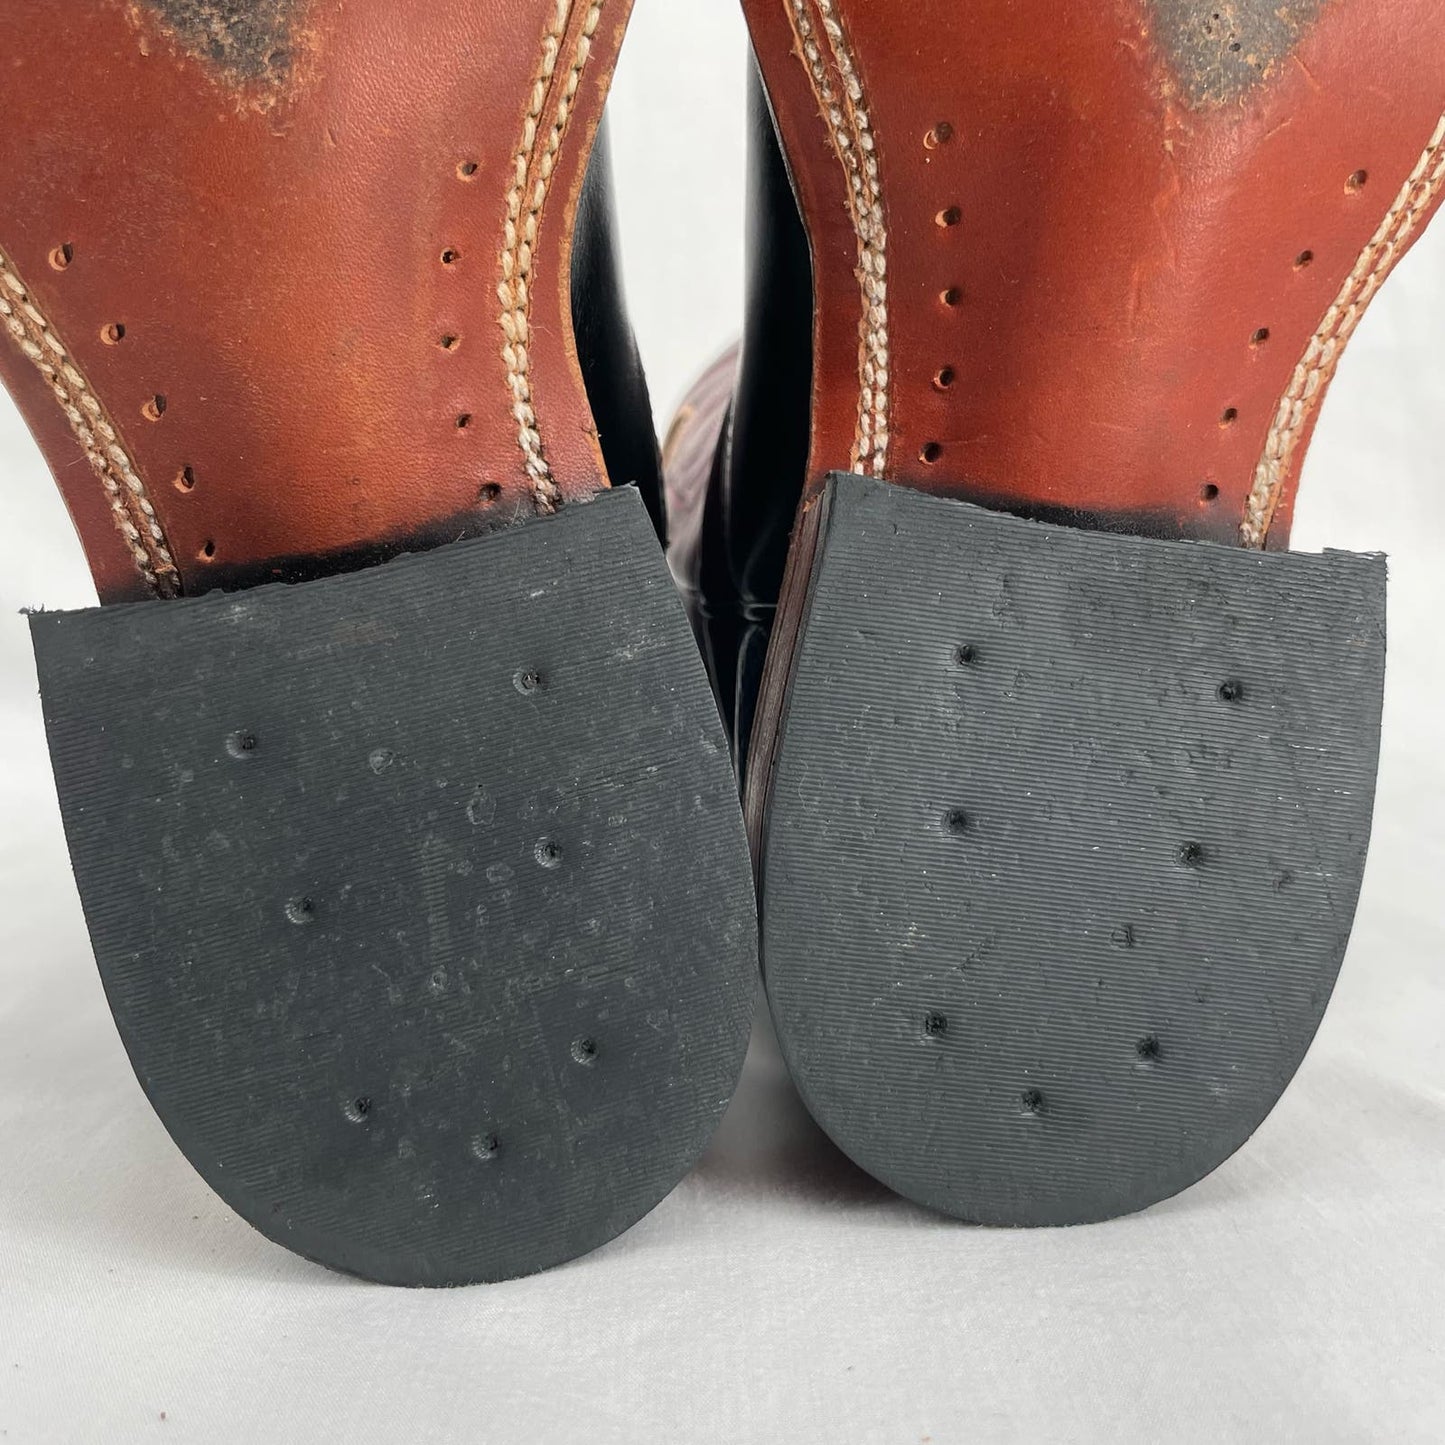 Boulet Purple Black Leather Cowboy Western Boots Roper Style Square Toe Size 7.5